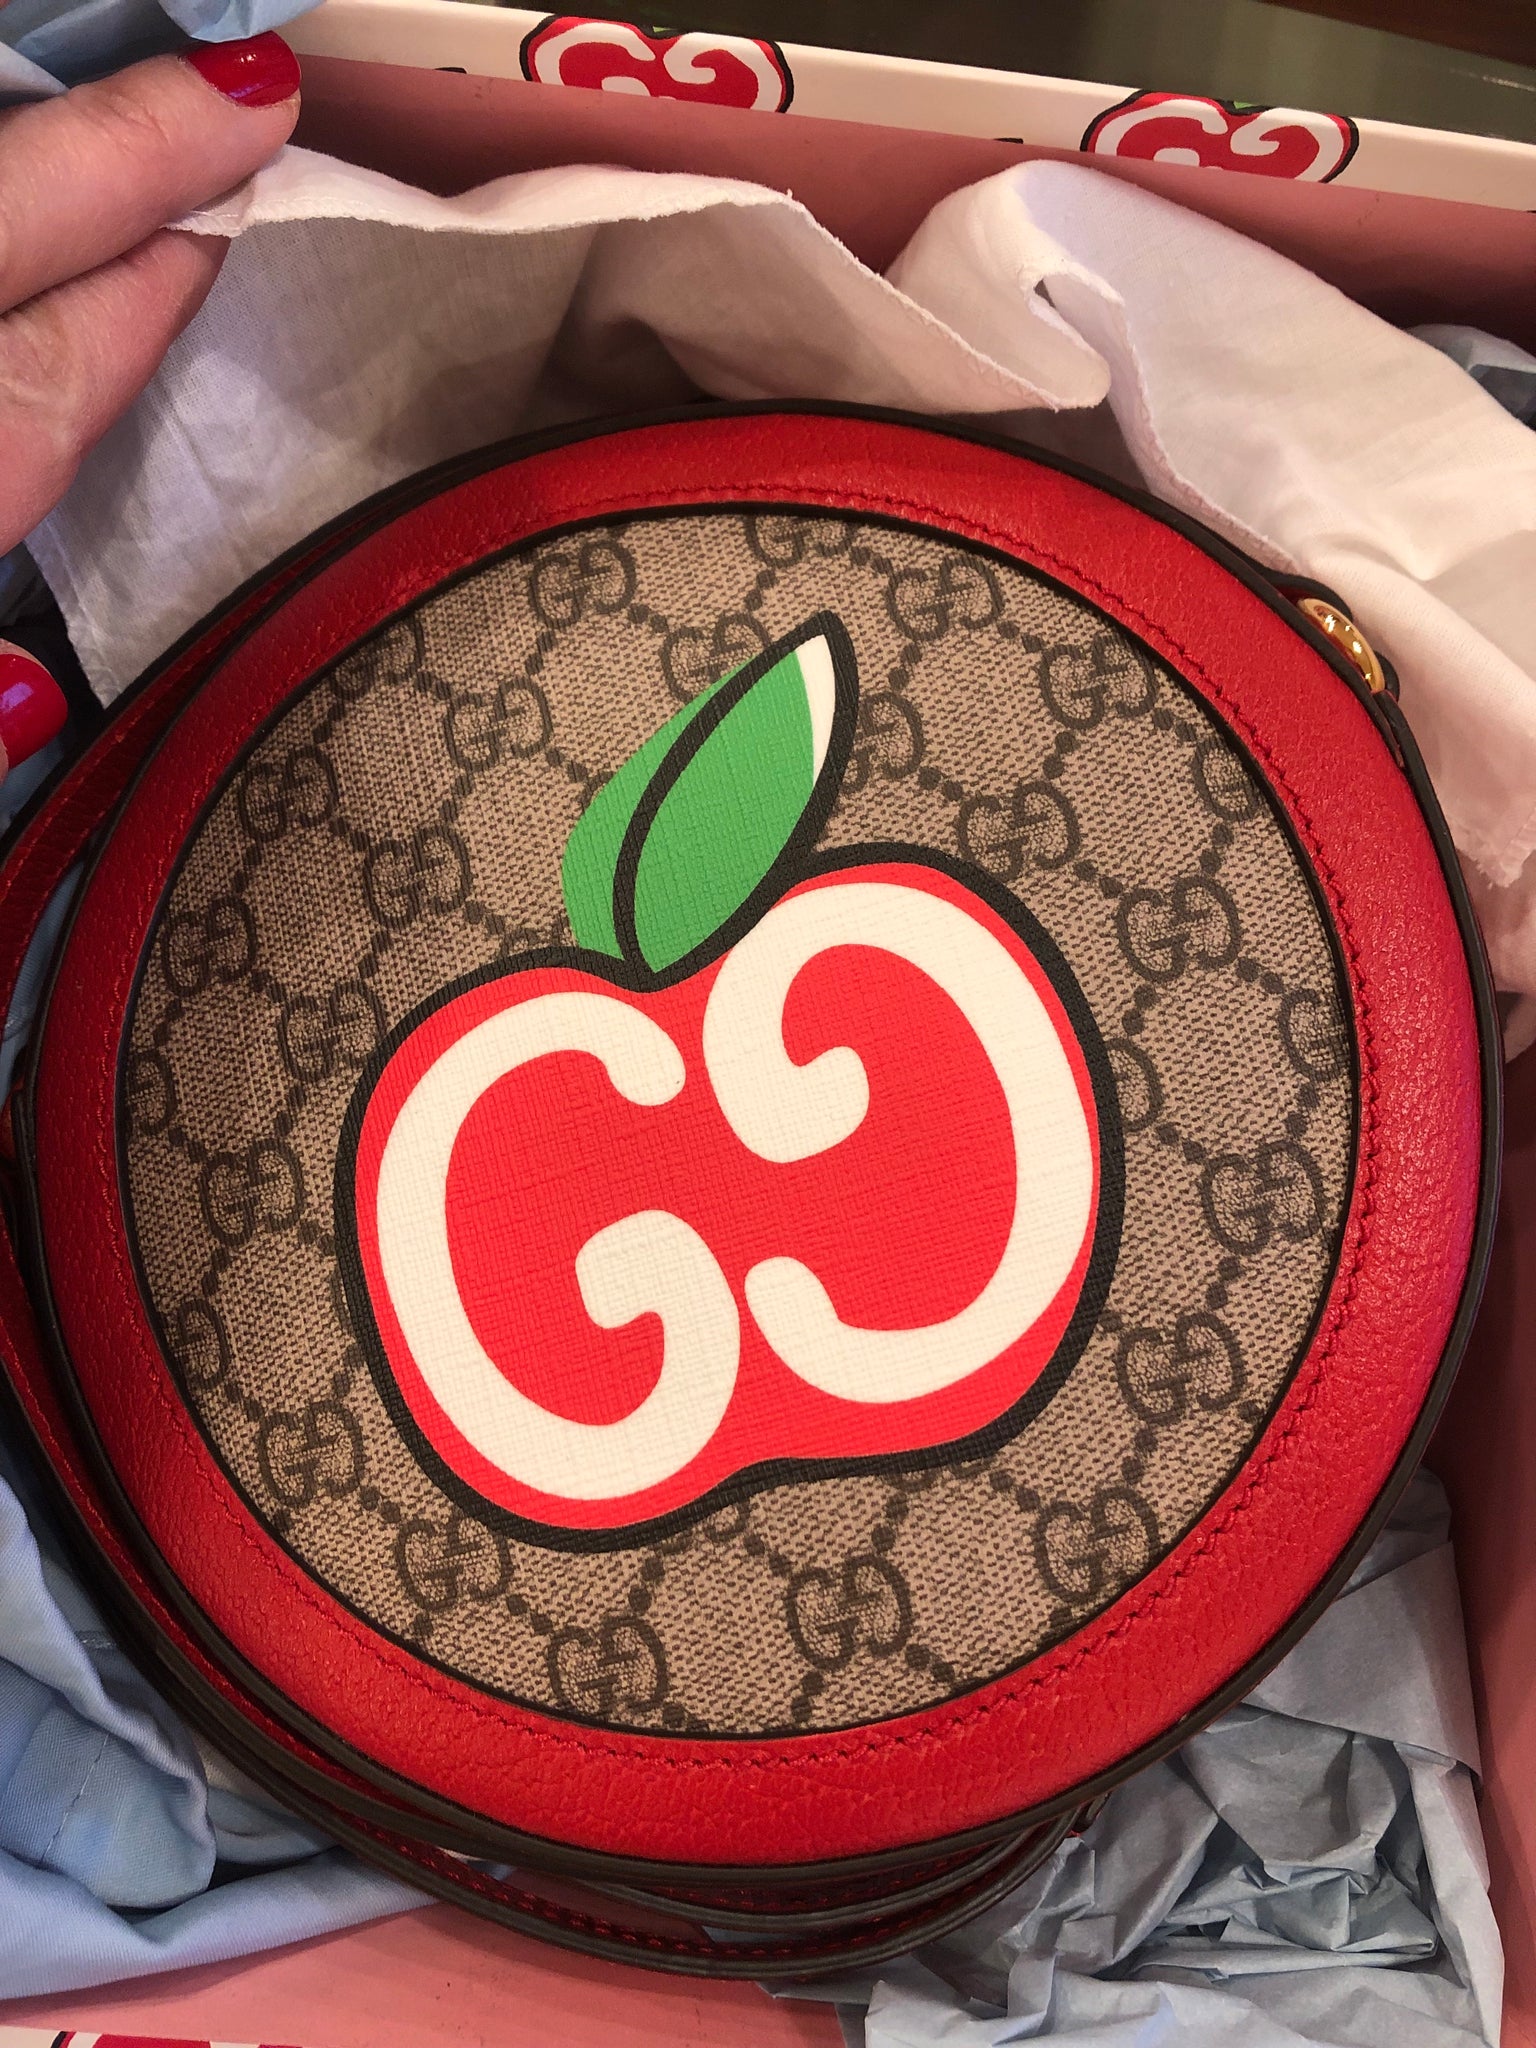 Gucci Original GG Canvas Round Shoulder Bag